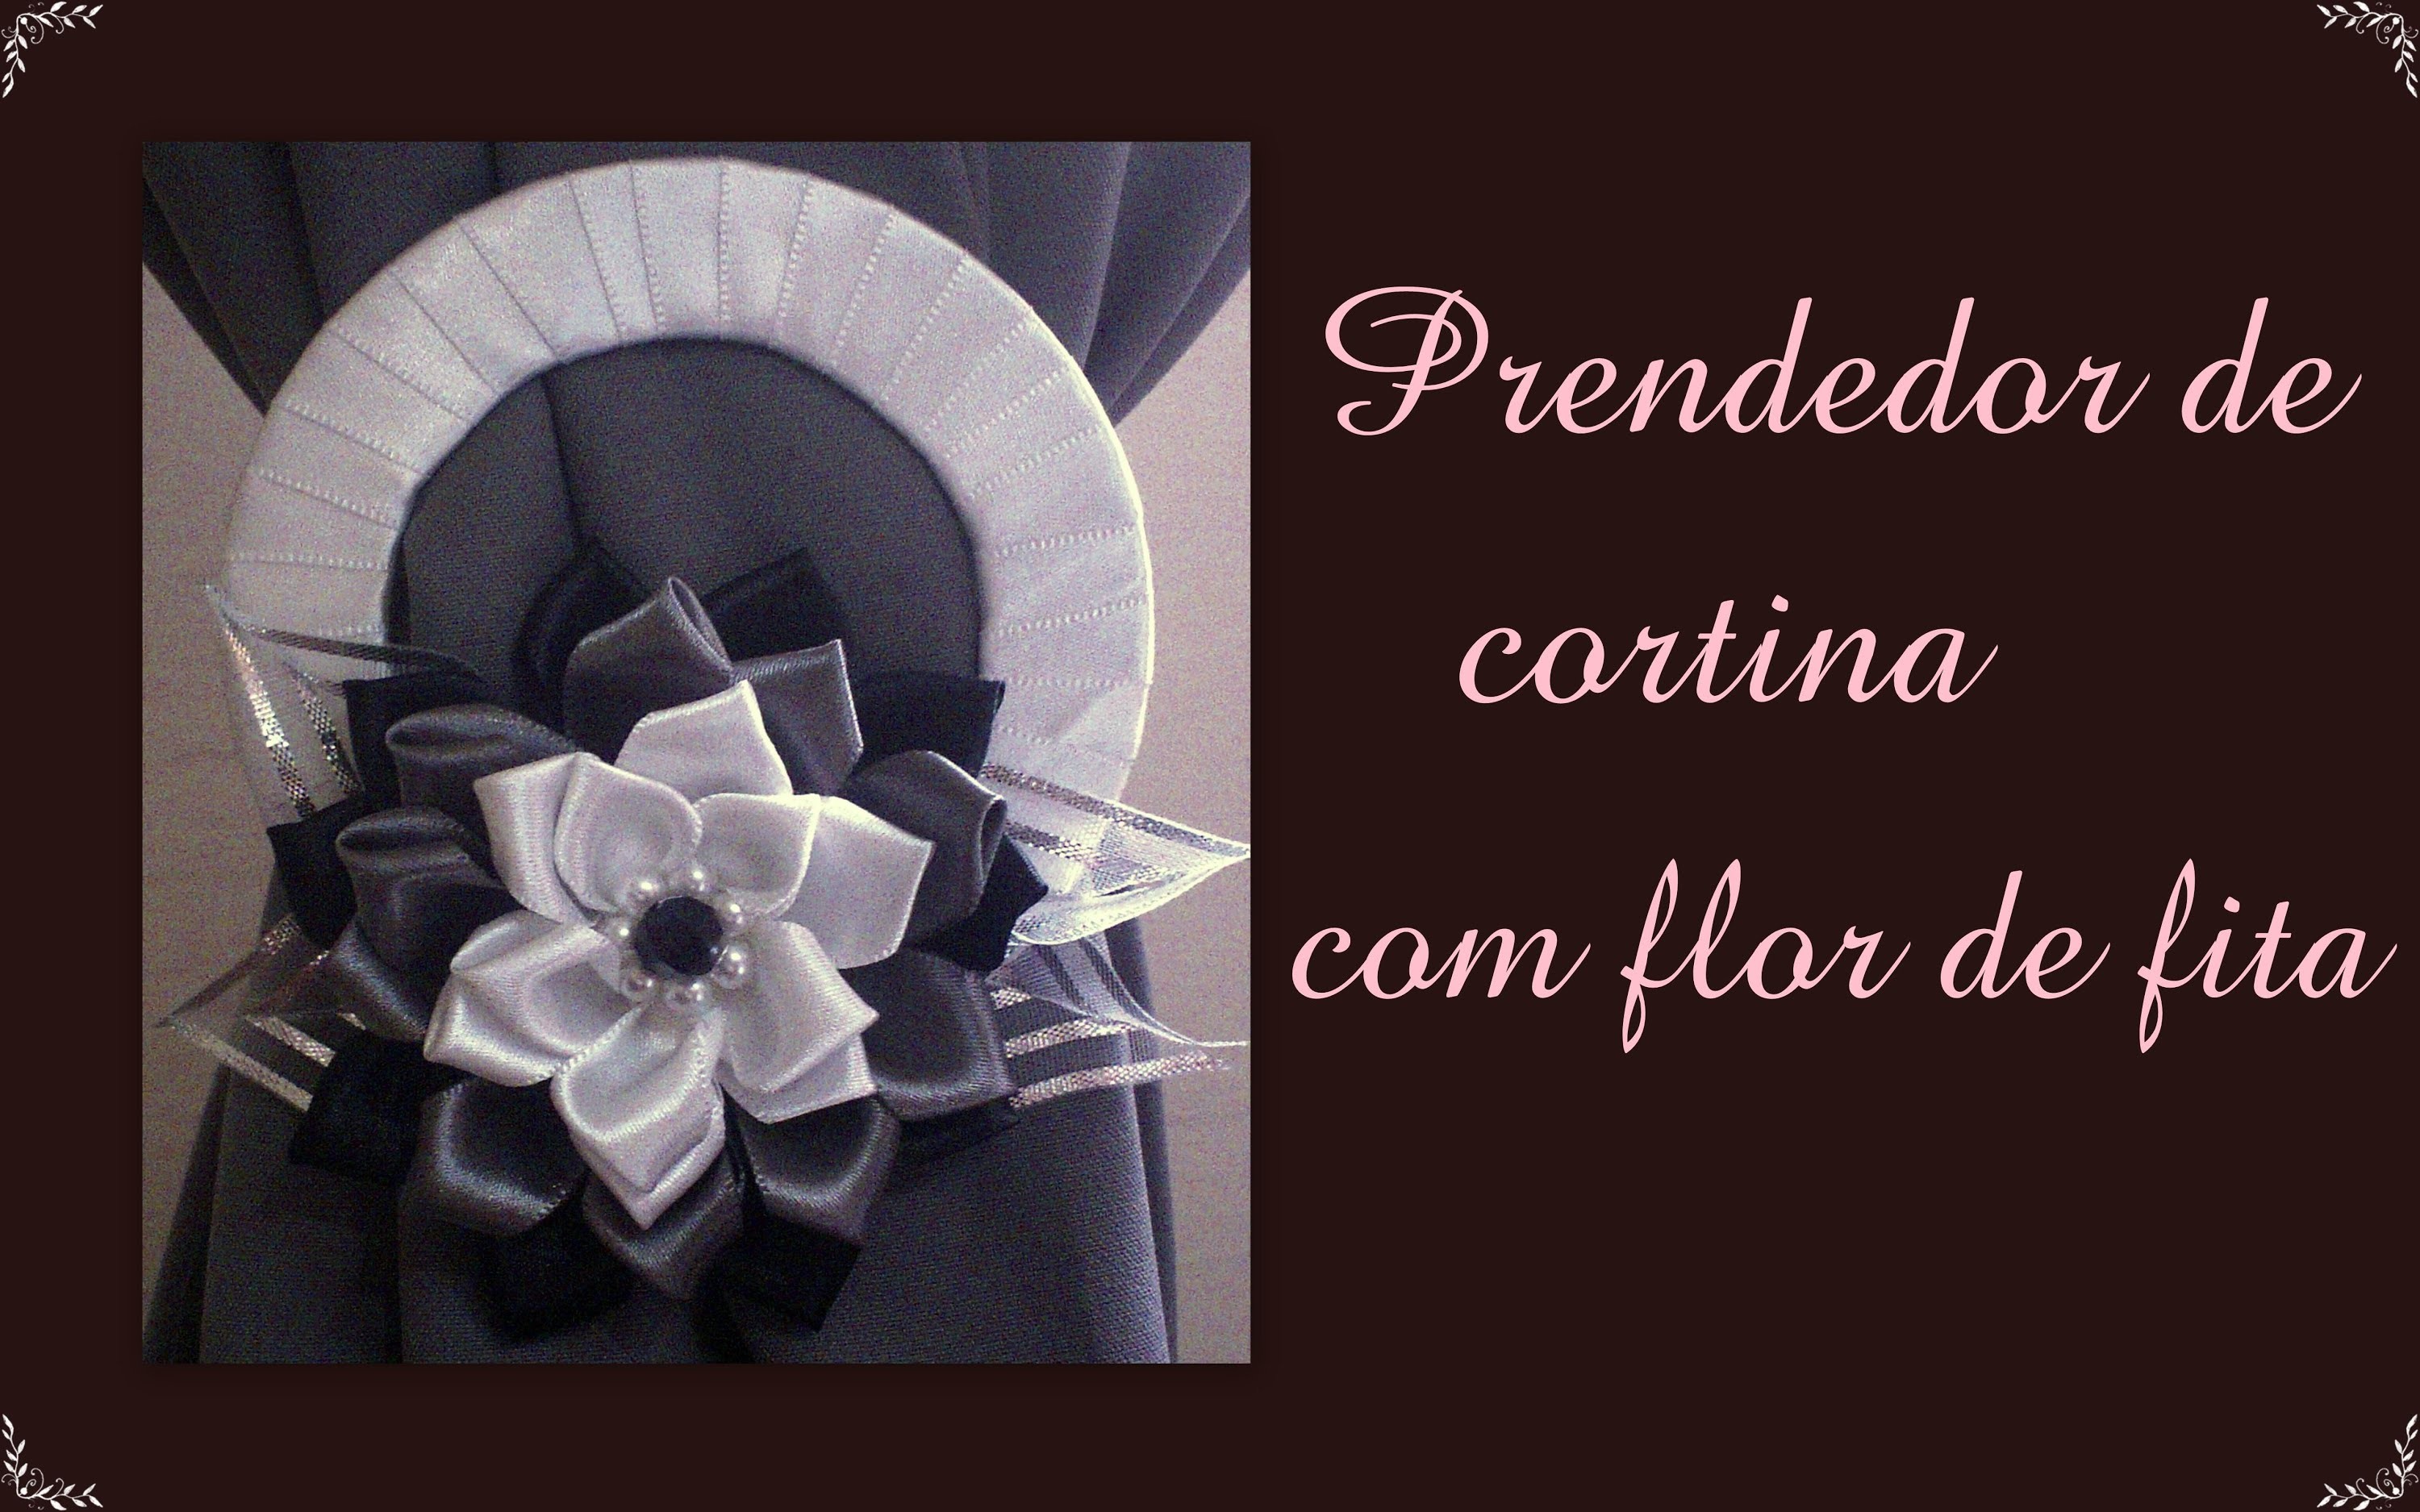 Prendedor de cortina com flor de fita de cetim. Catch curtain with flower satin ribbon